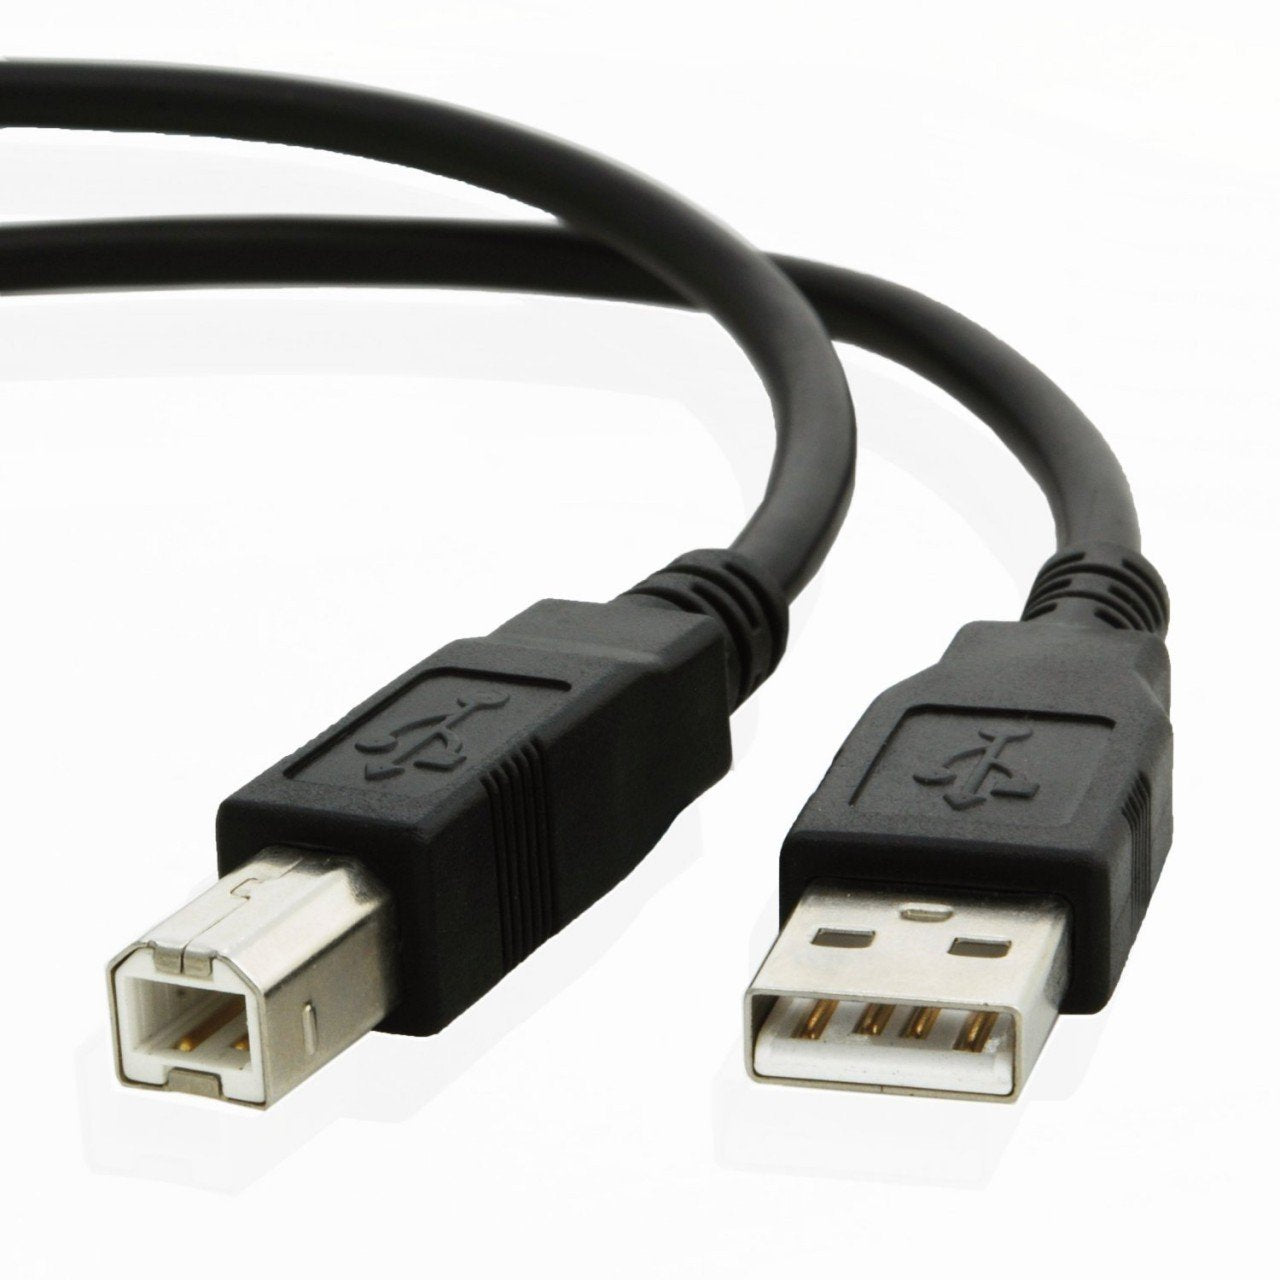 USB cable for Canon PIXMA IB4020